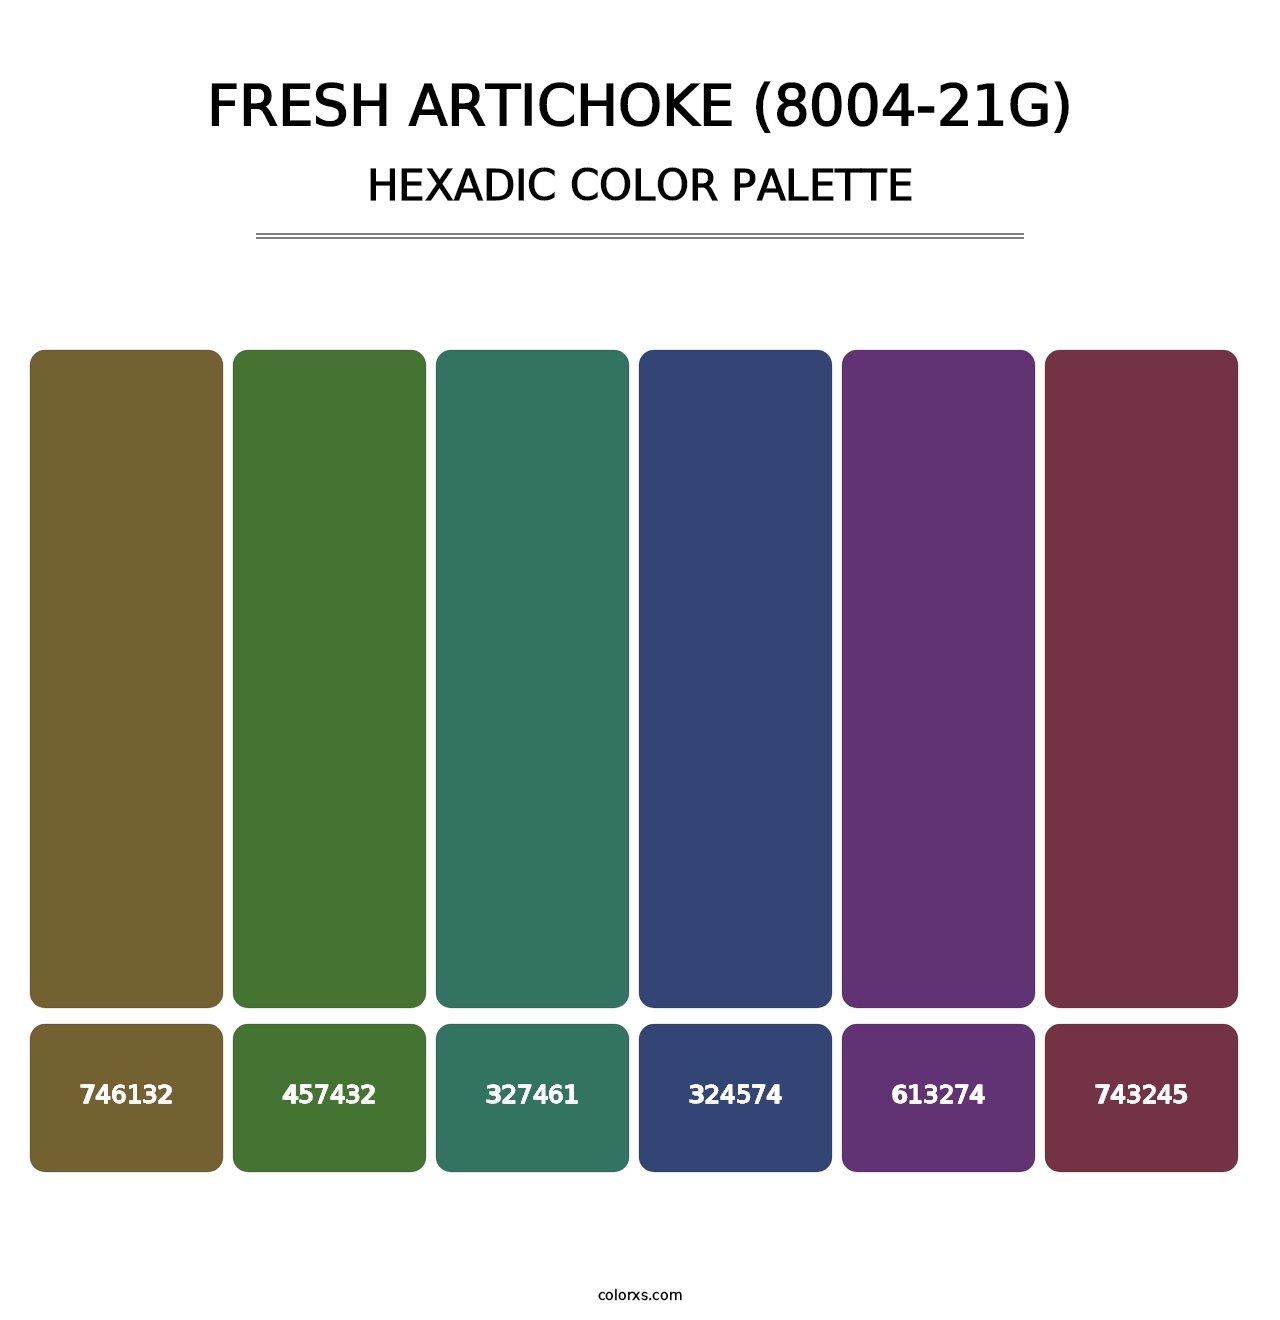 Fresh Artichoke (8004-21G) - Hexadic Color Palette